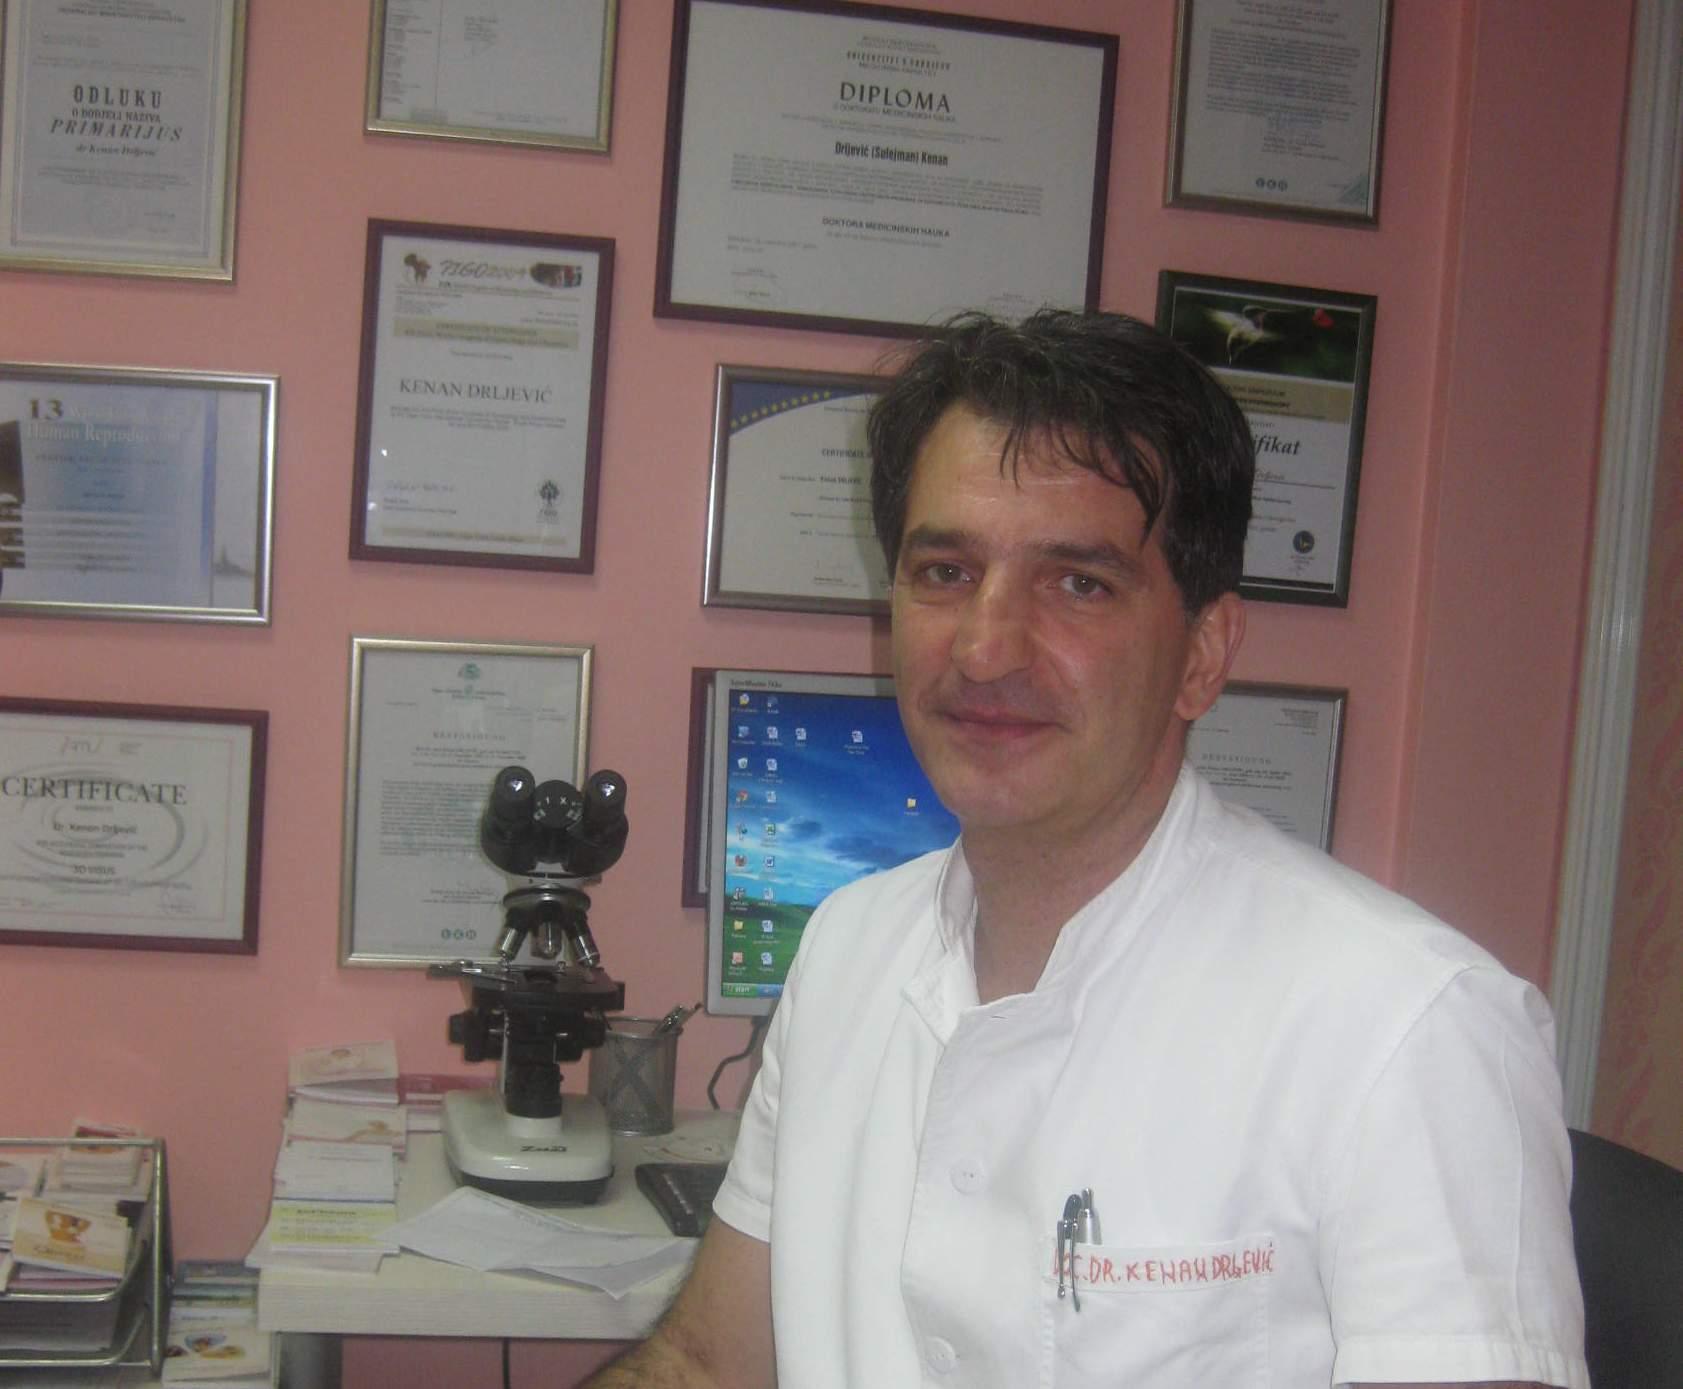 Prof. dr. Kenan Drljević - Avaz